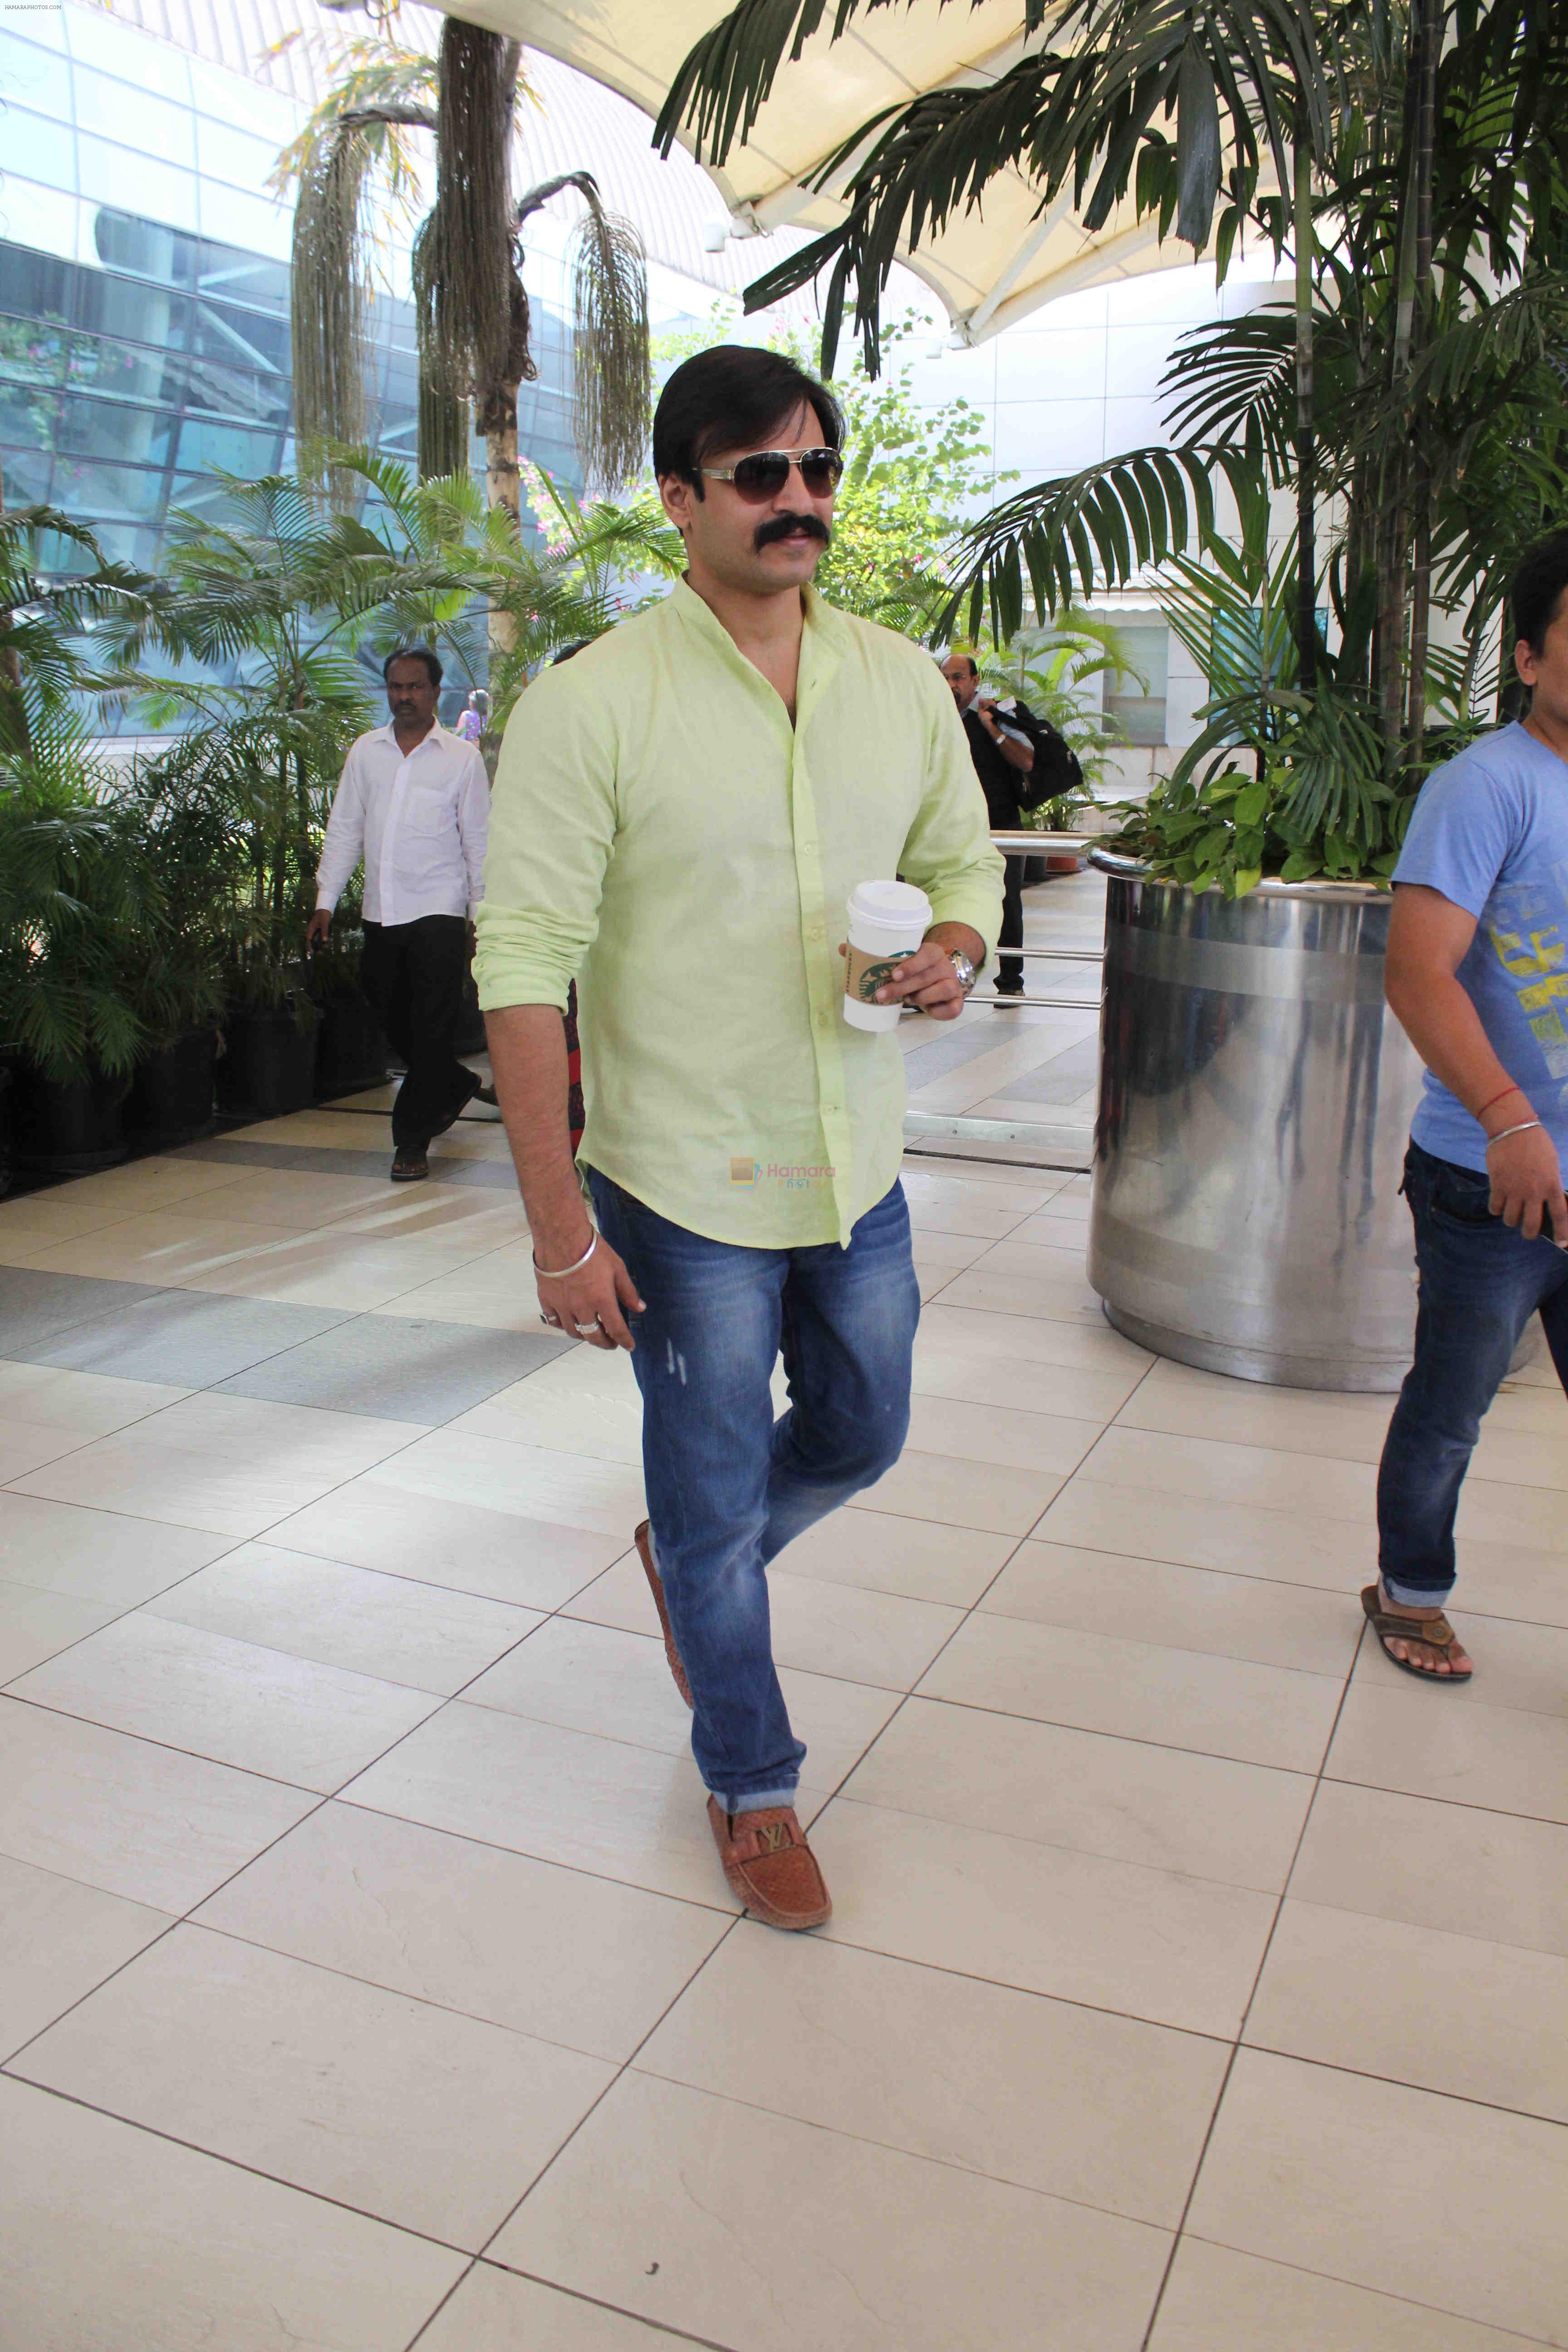 Vivek Oberoi spotted at Mumbai Domestic Airport on 26th Jan 2015